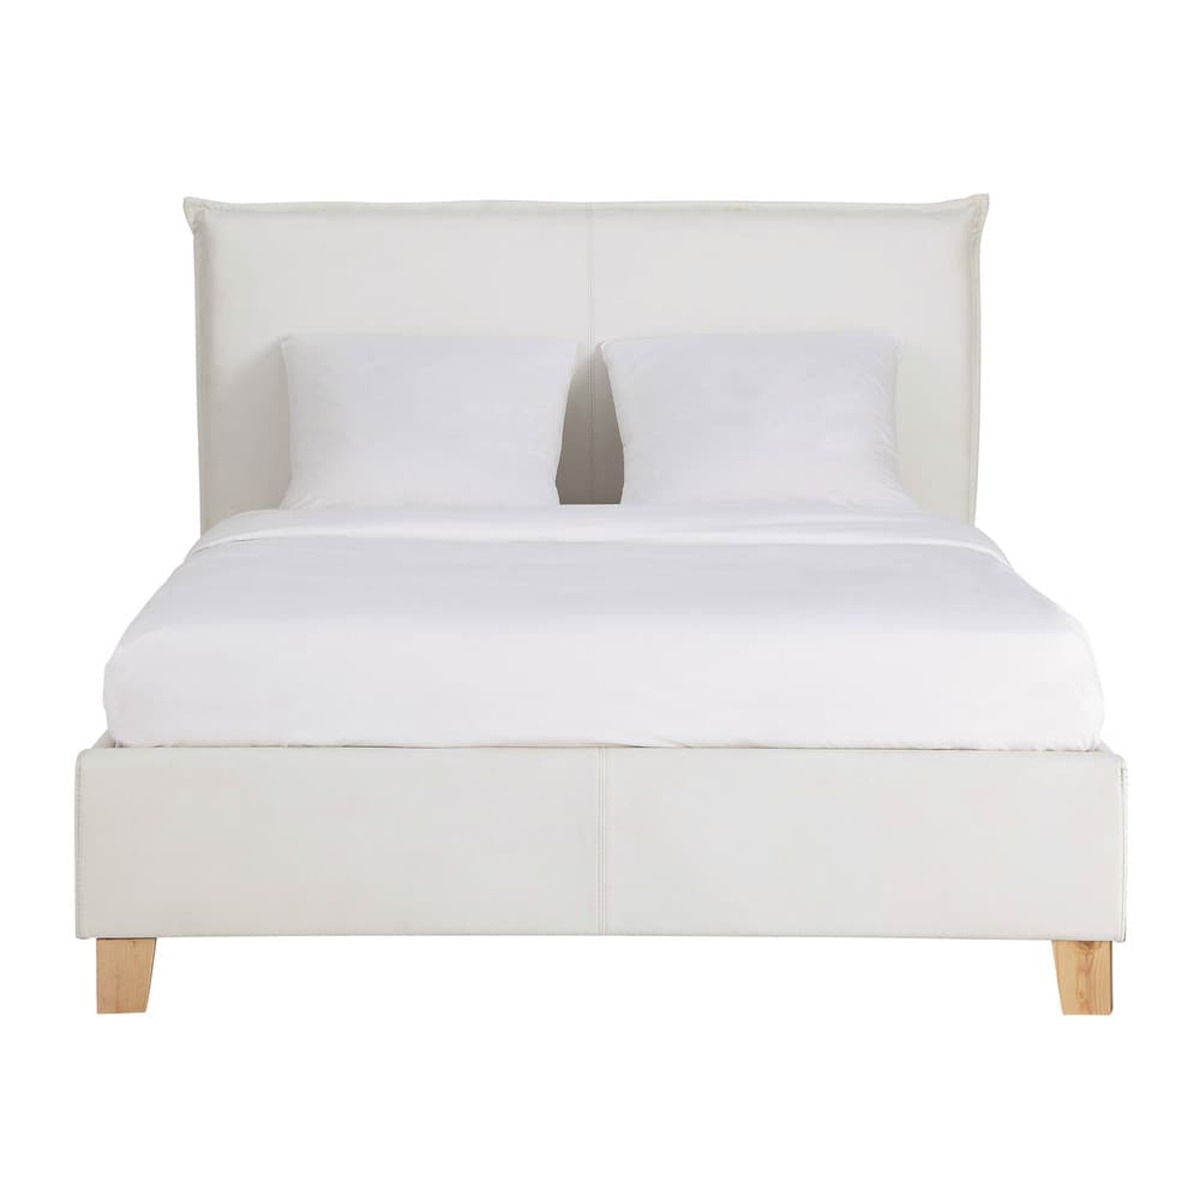 Cama-baúl con somier de láminas 160x200 blanca Pillow